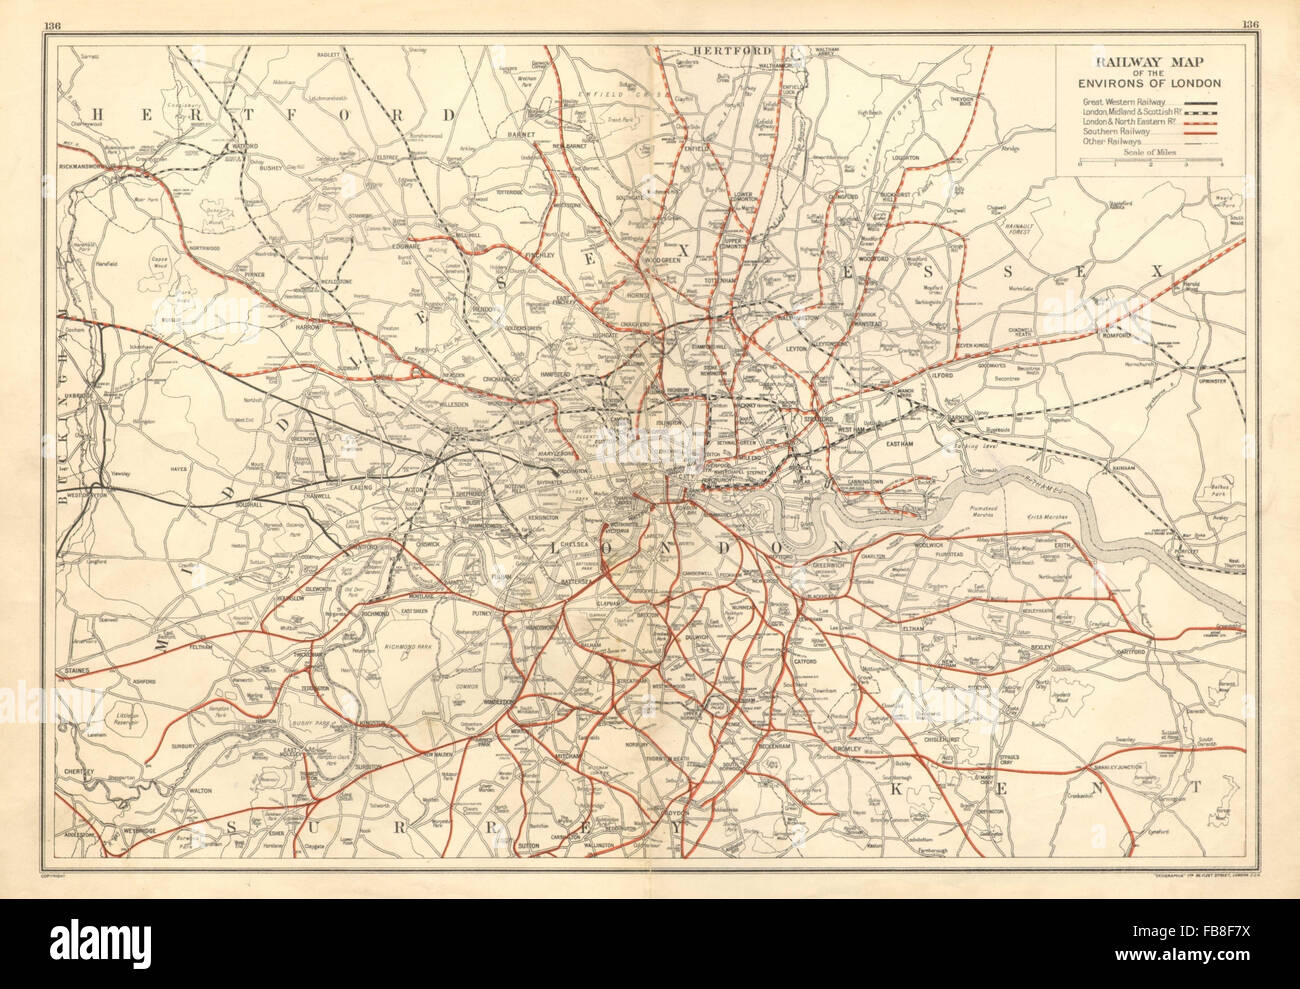 LONDON: Railway map of London & environs. GWR LMSR LNER SR, 1928 Stock Photo